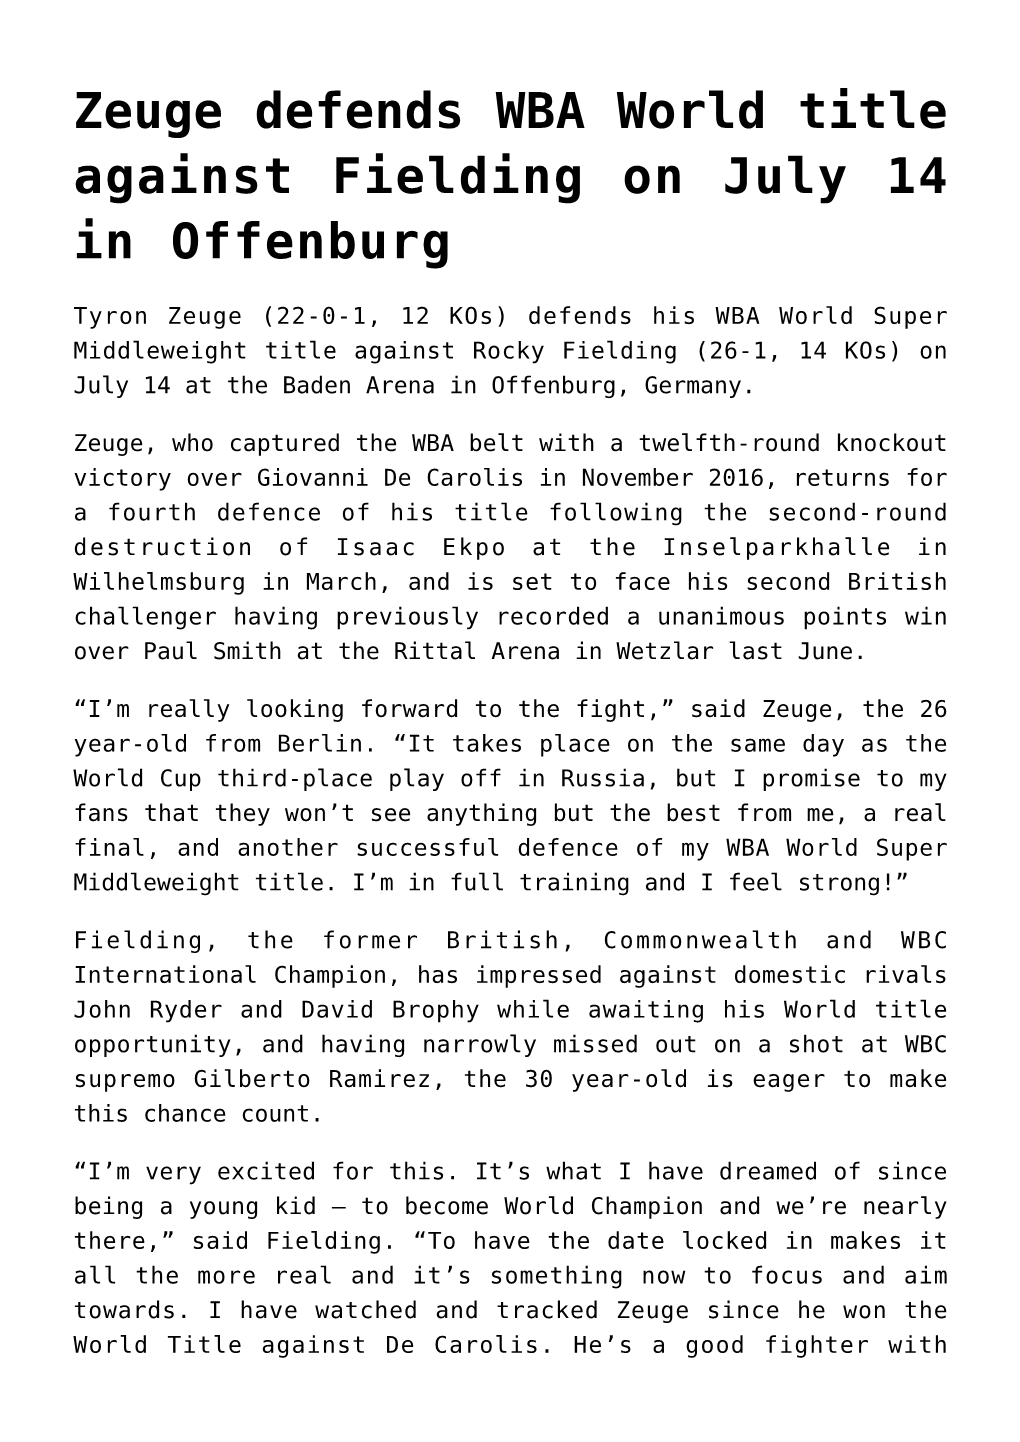 Zeuge Defends WBA World Title Against Fielding on July 14 in Offenburg